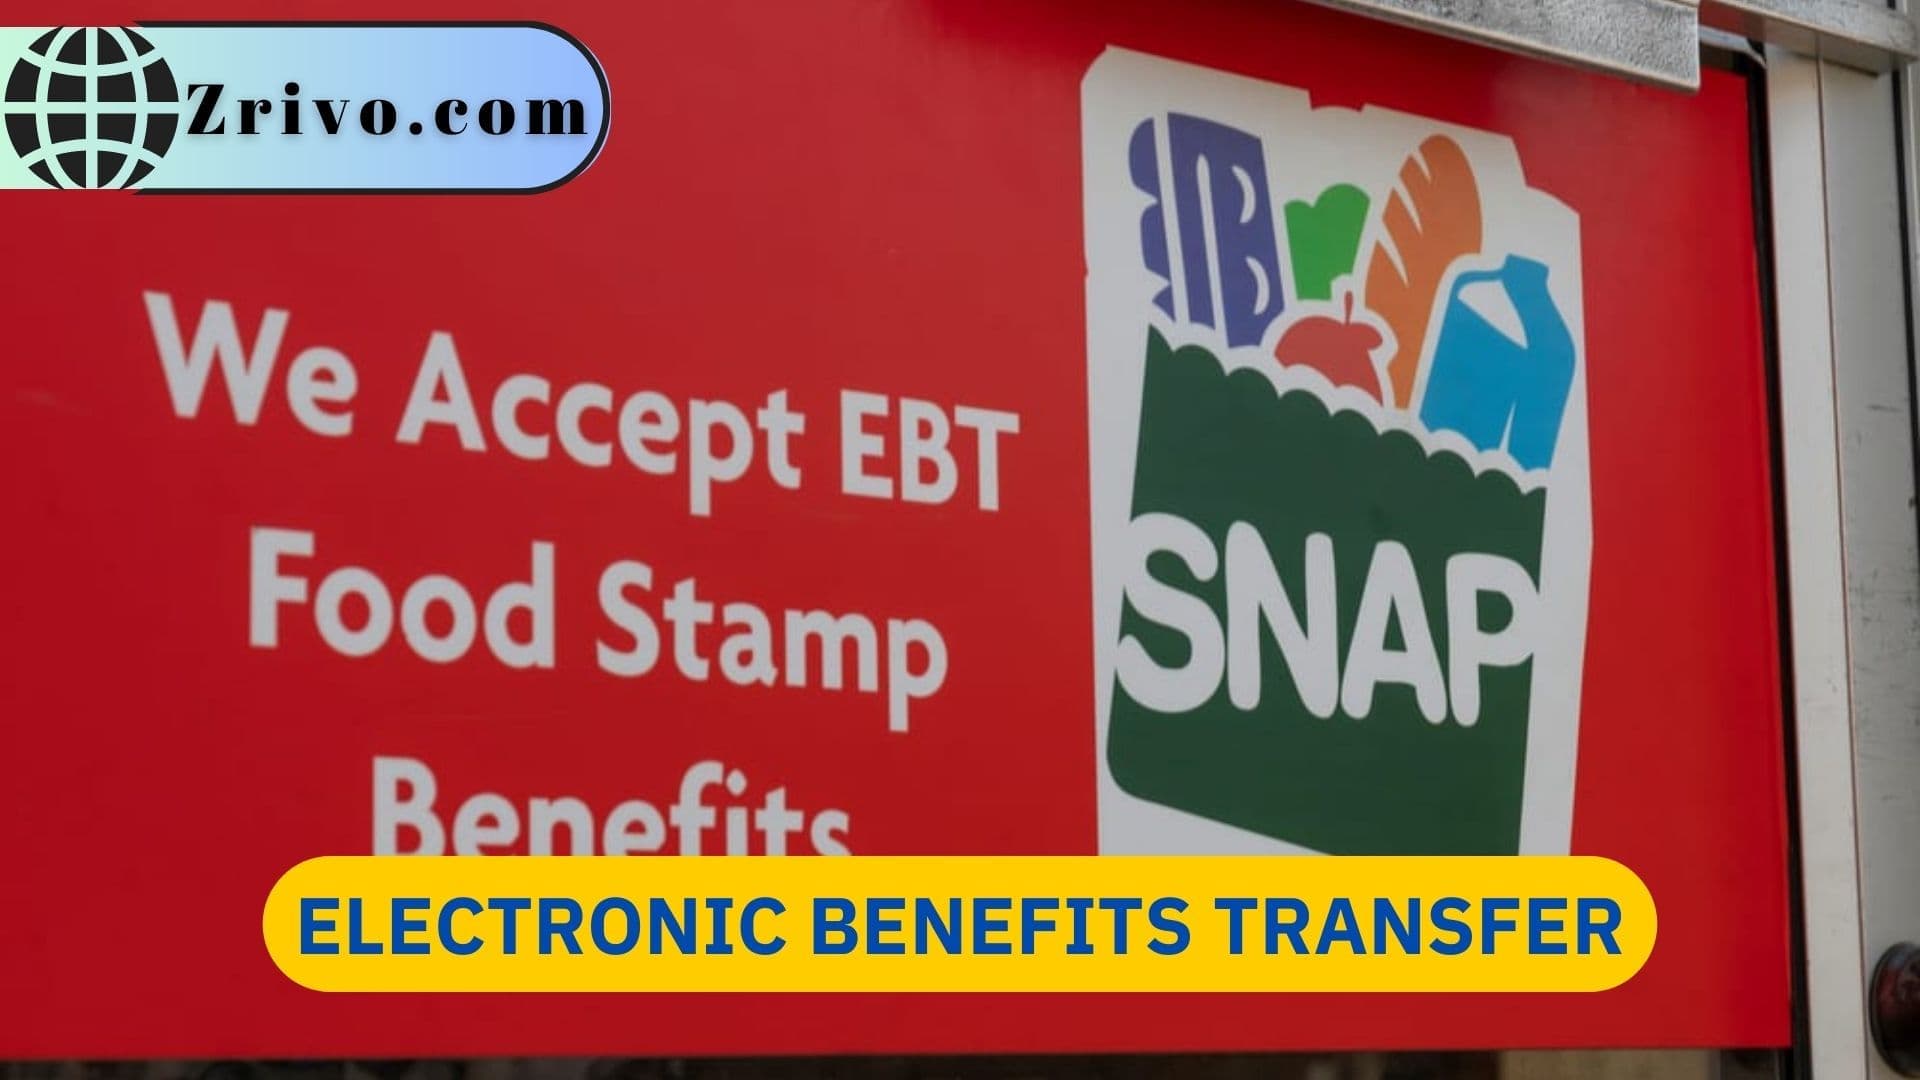 Electronic Benefits Transfer